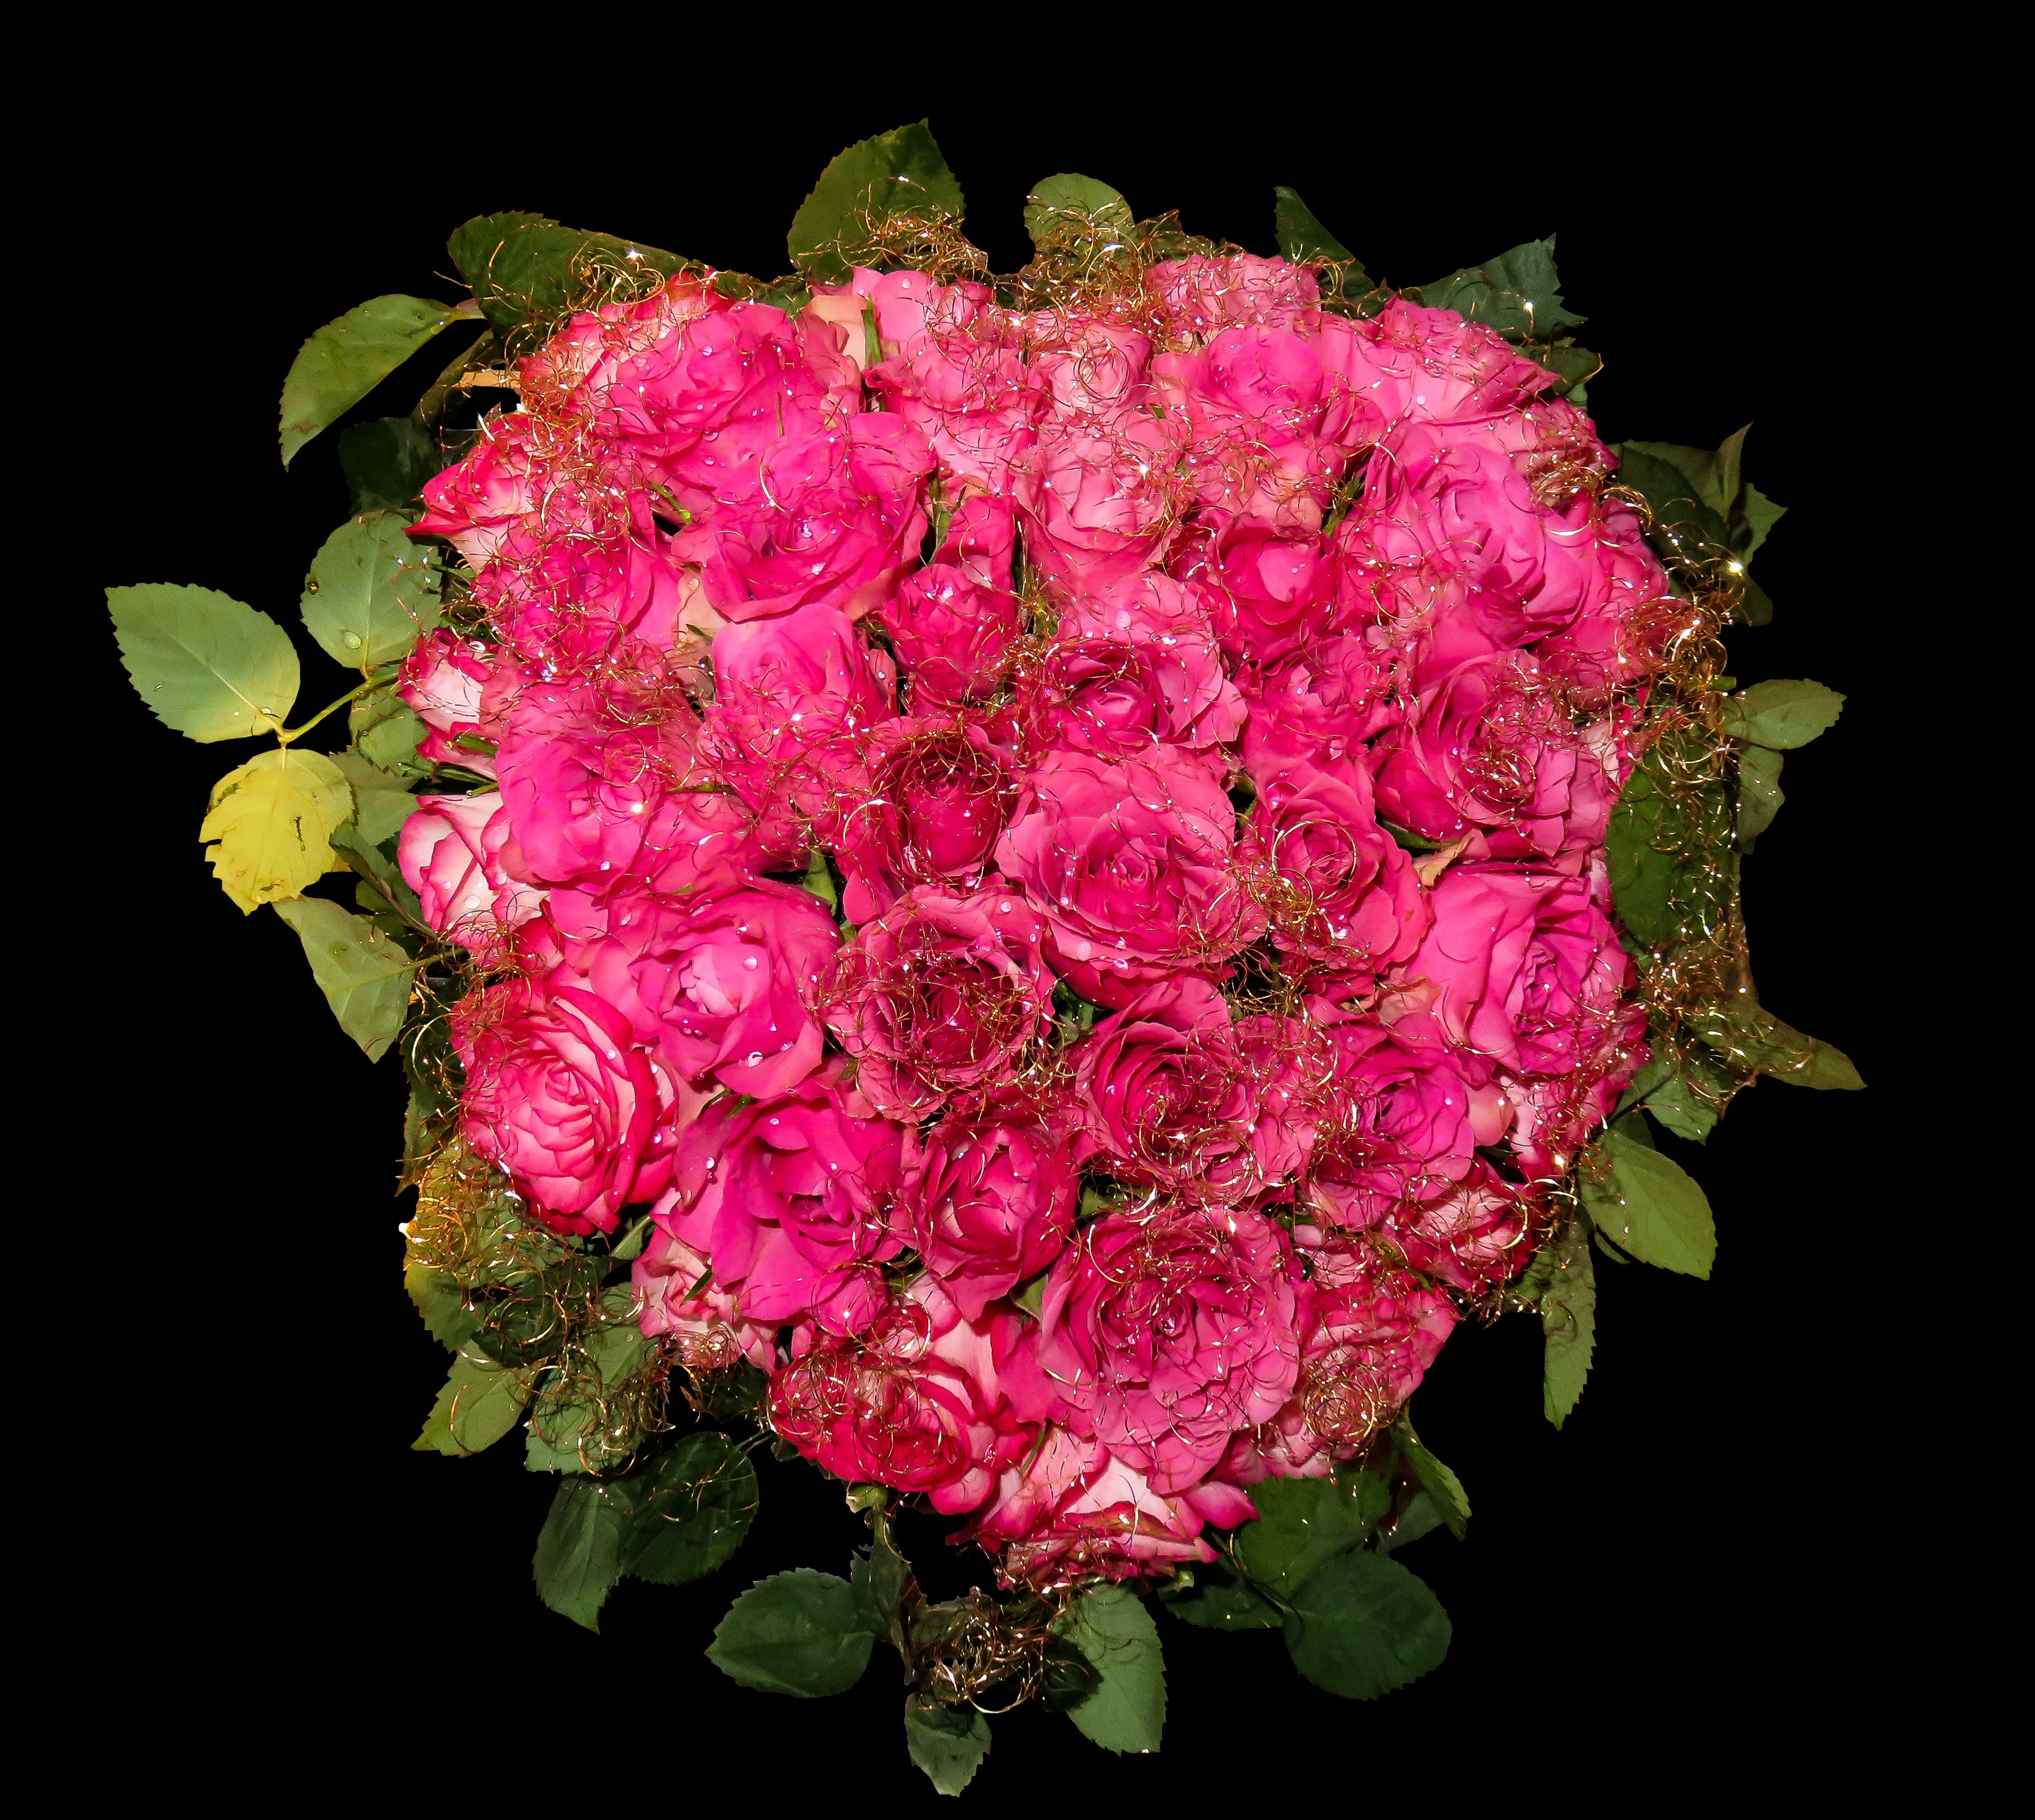 Flowers, Bouquet, Roses, flower, pink color